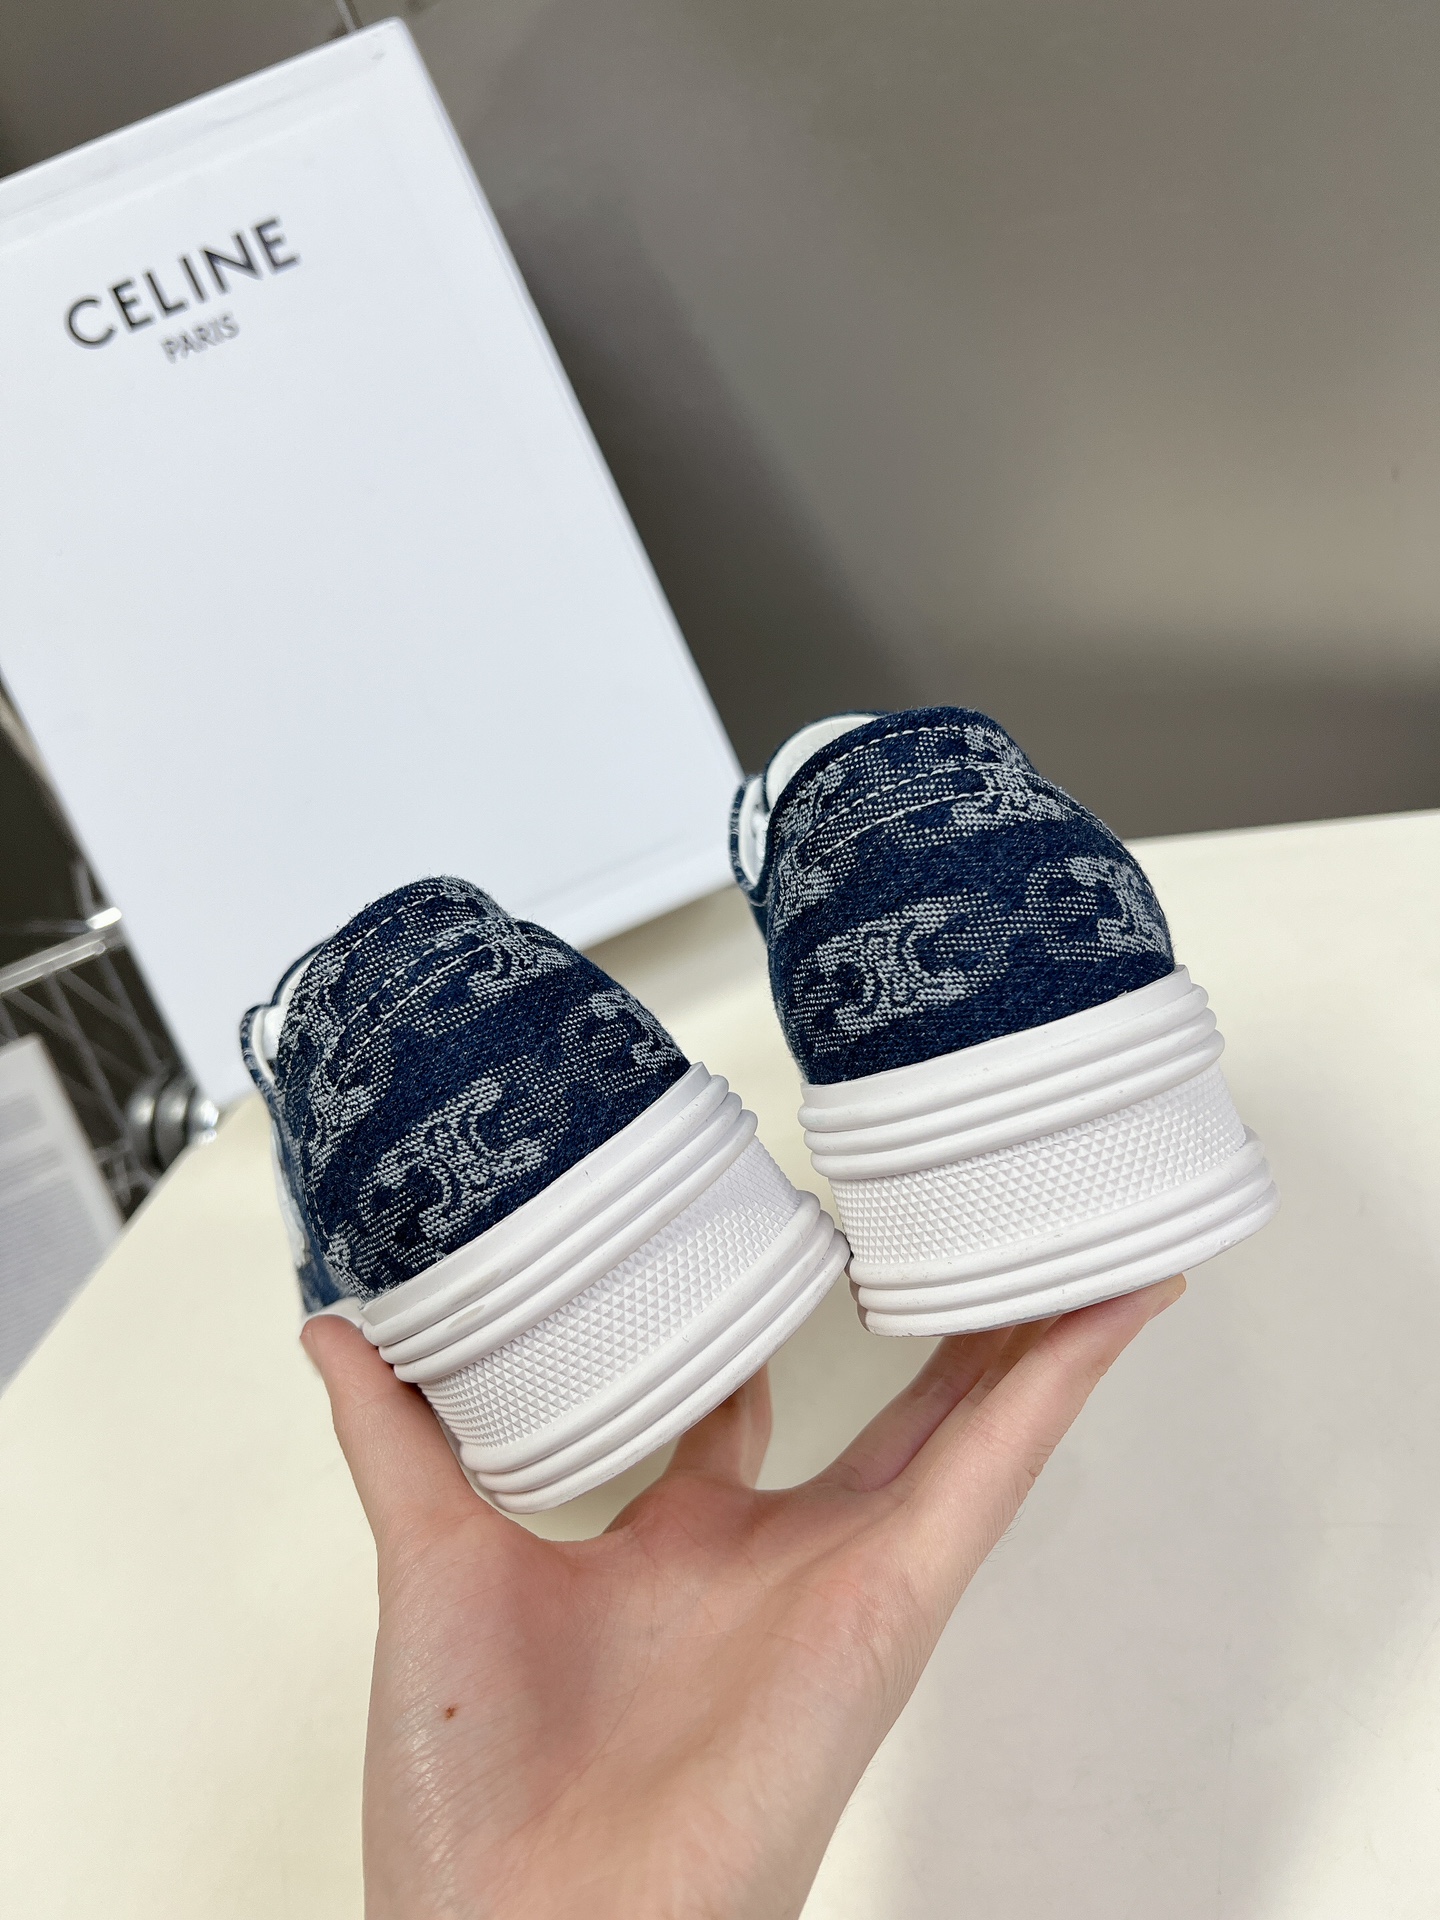 Celine思琳春夏款帆布鞋简单舒服干净就这你以为Hedi设计的只是普普通通的球鞋吗他有注入自己的时髦巧